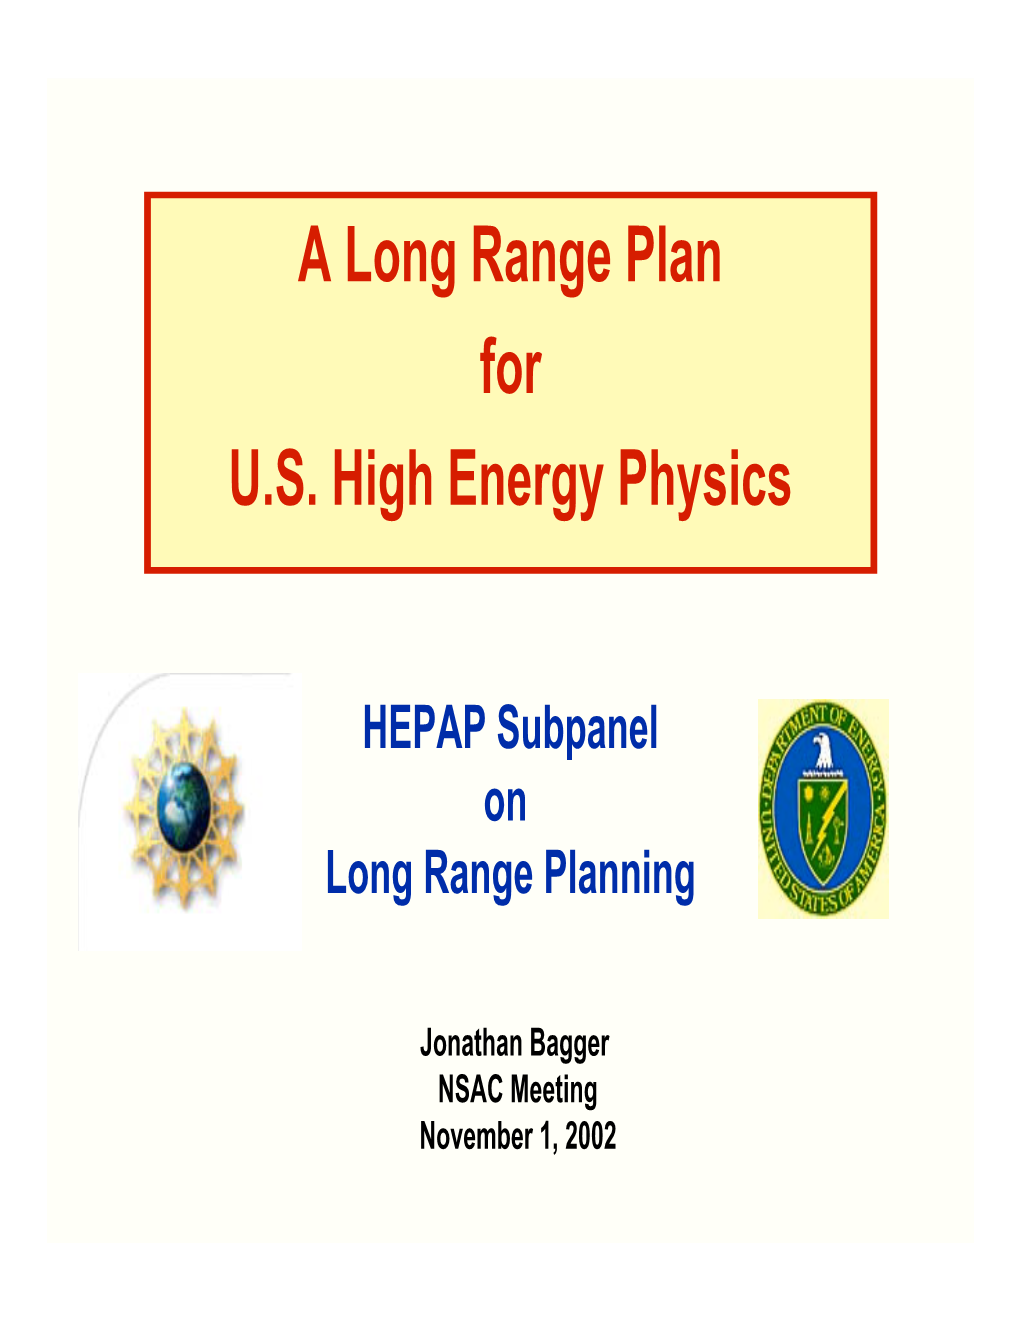 A Long Range Plan for U.S. High Energy Physics